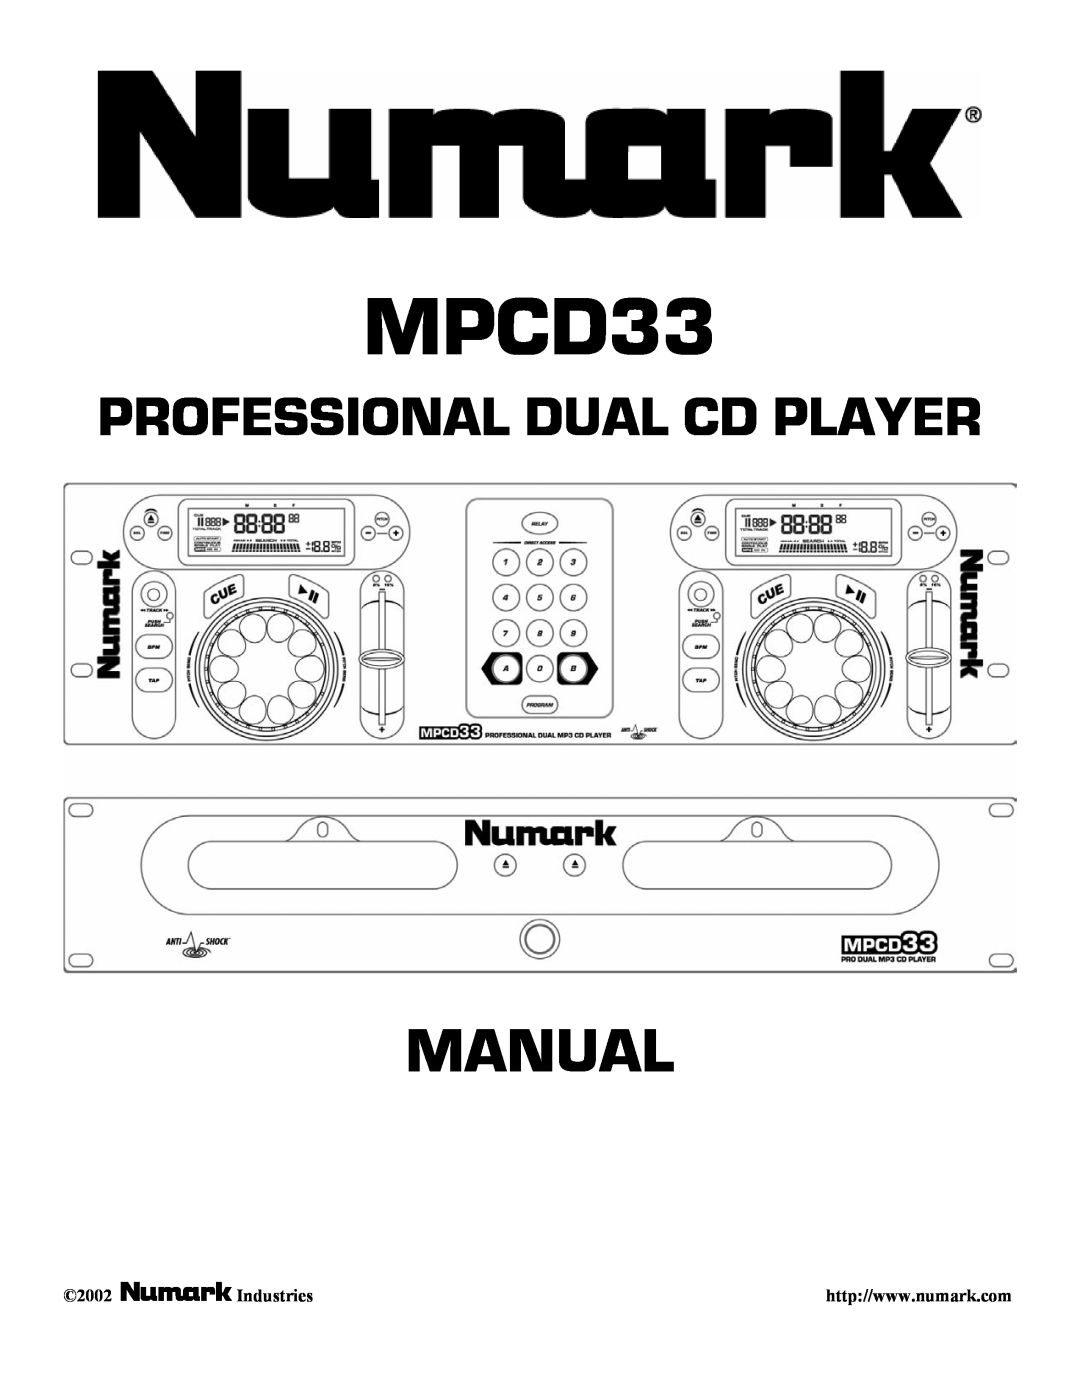 Numark Industries MPCD33 manual Manual, Professional Dual Cd Player, Industries, 2002 